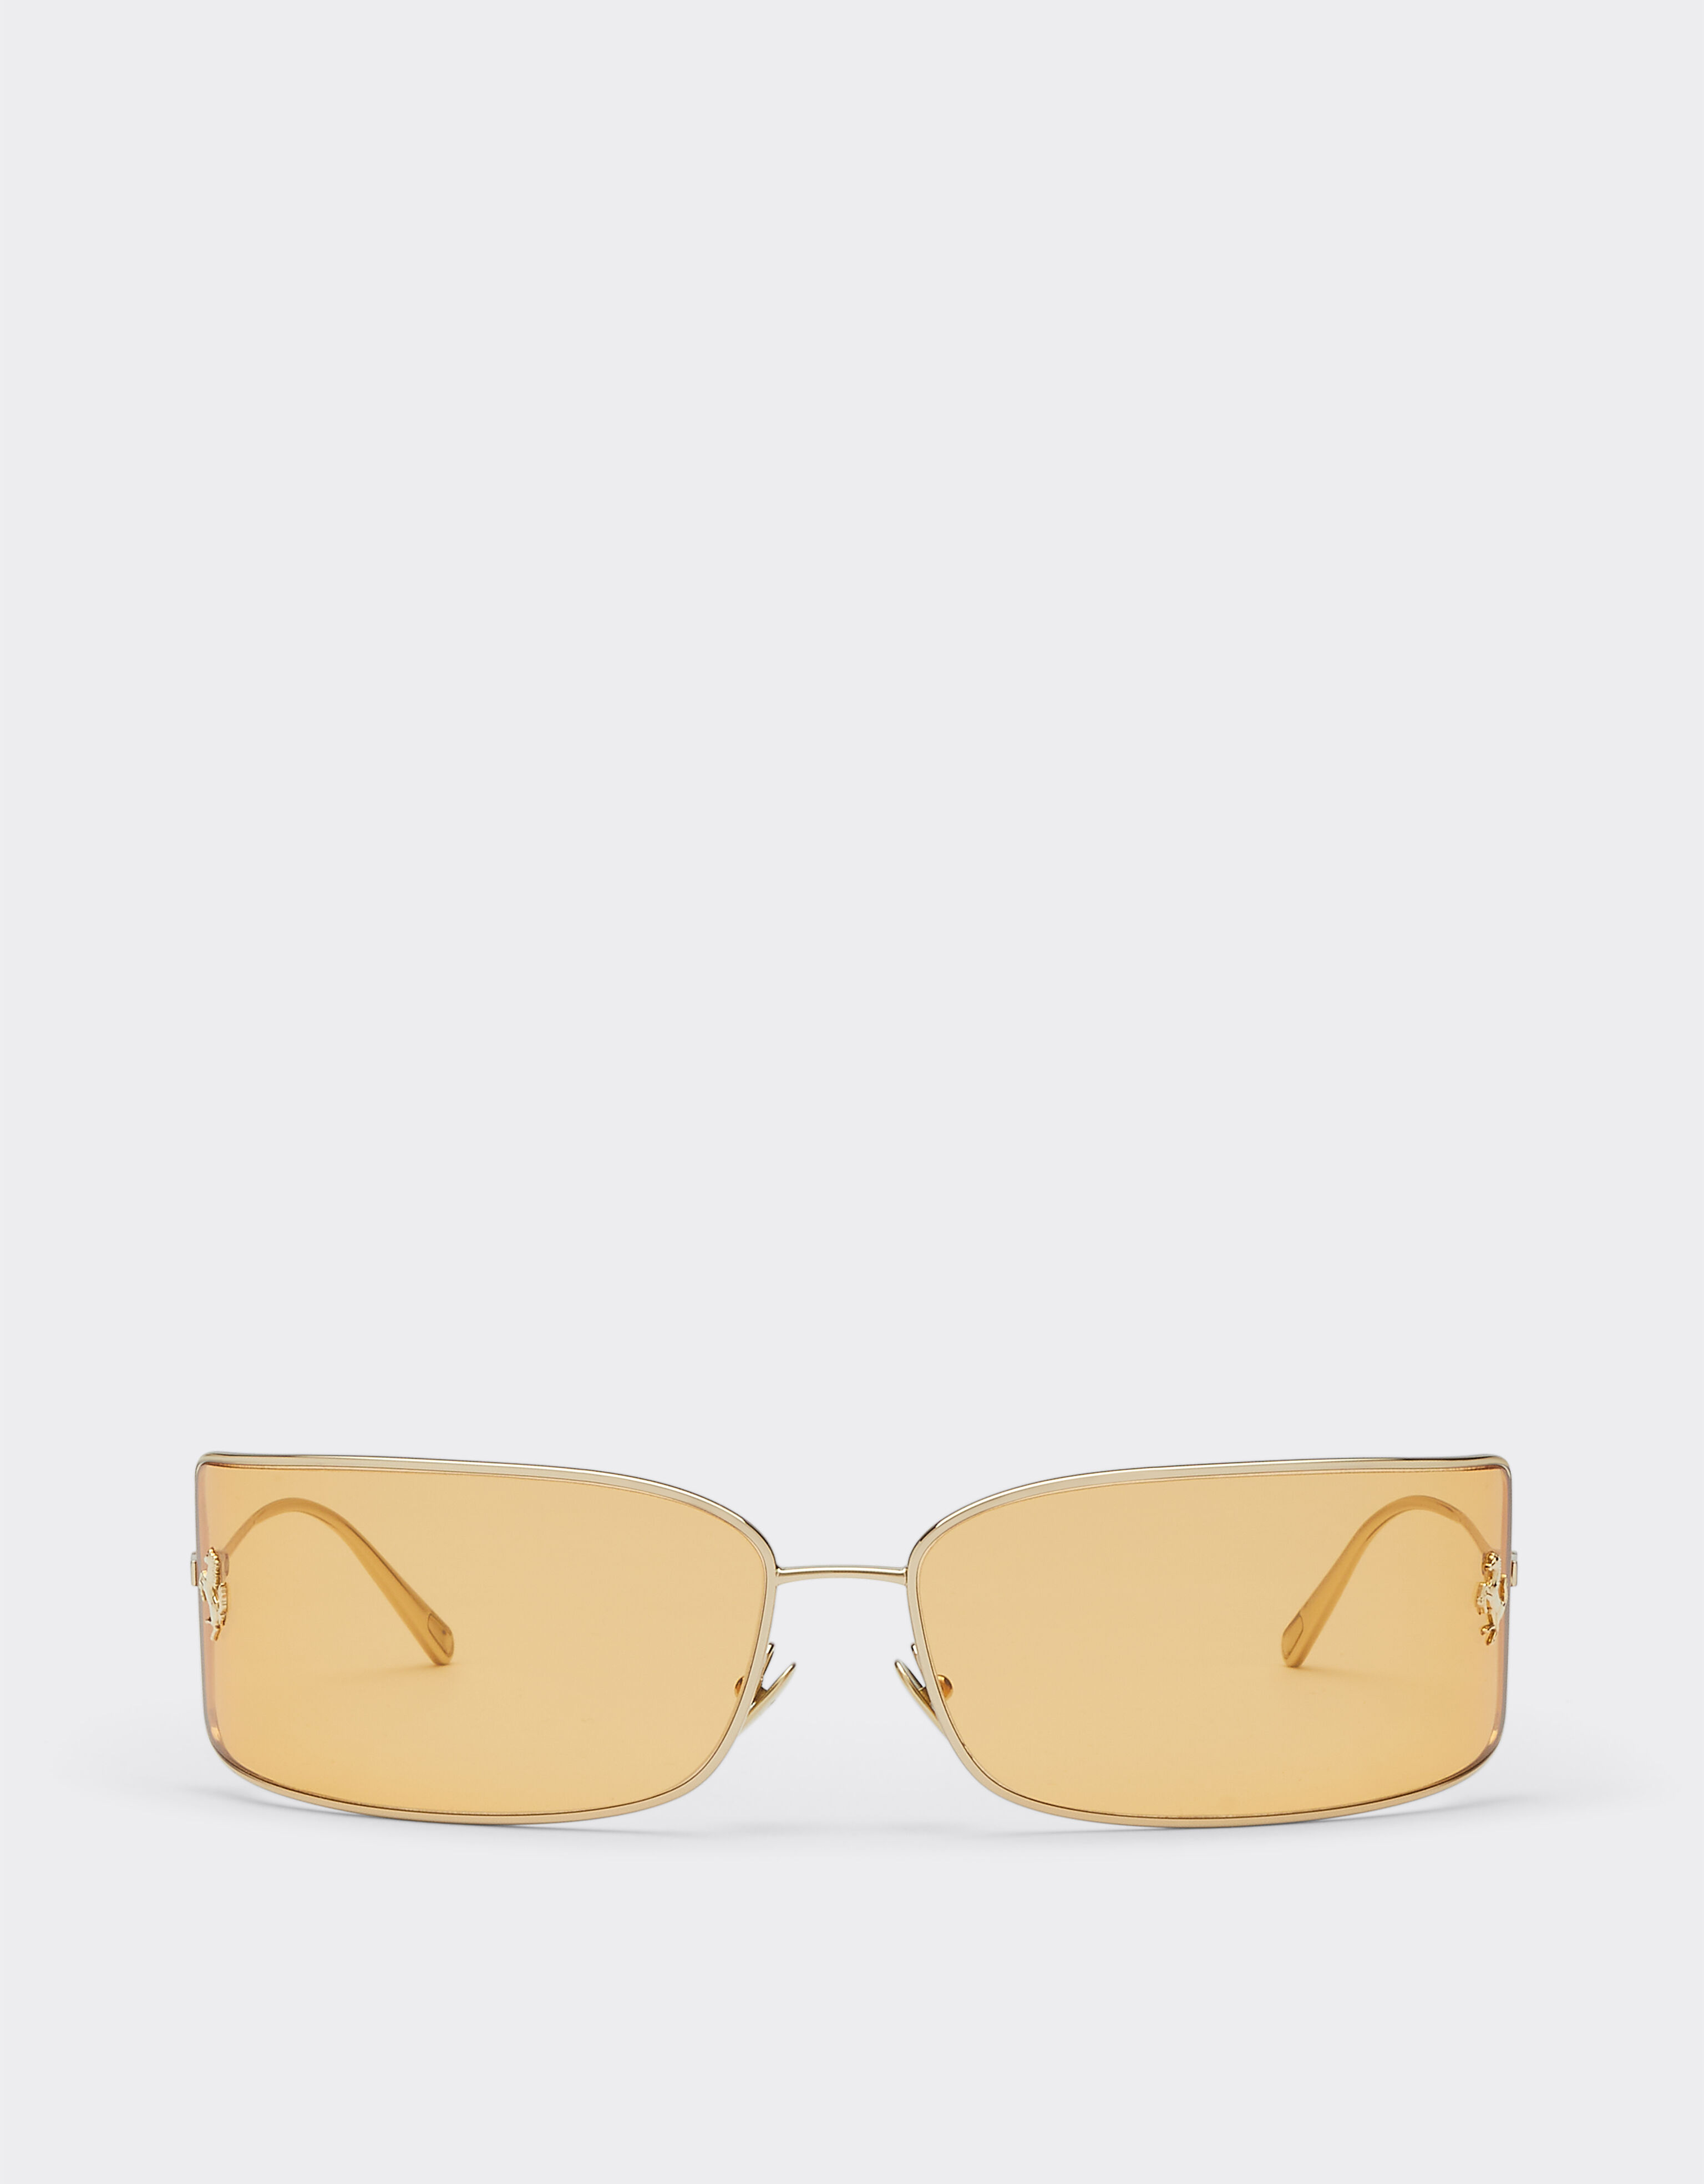 Ferrari Ferrari shield sunglasses with gold lenses Black F1201f